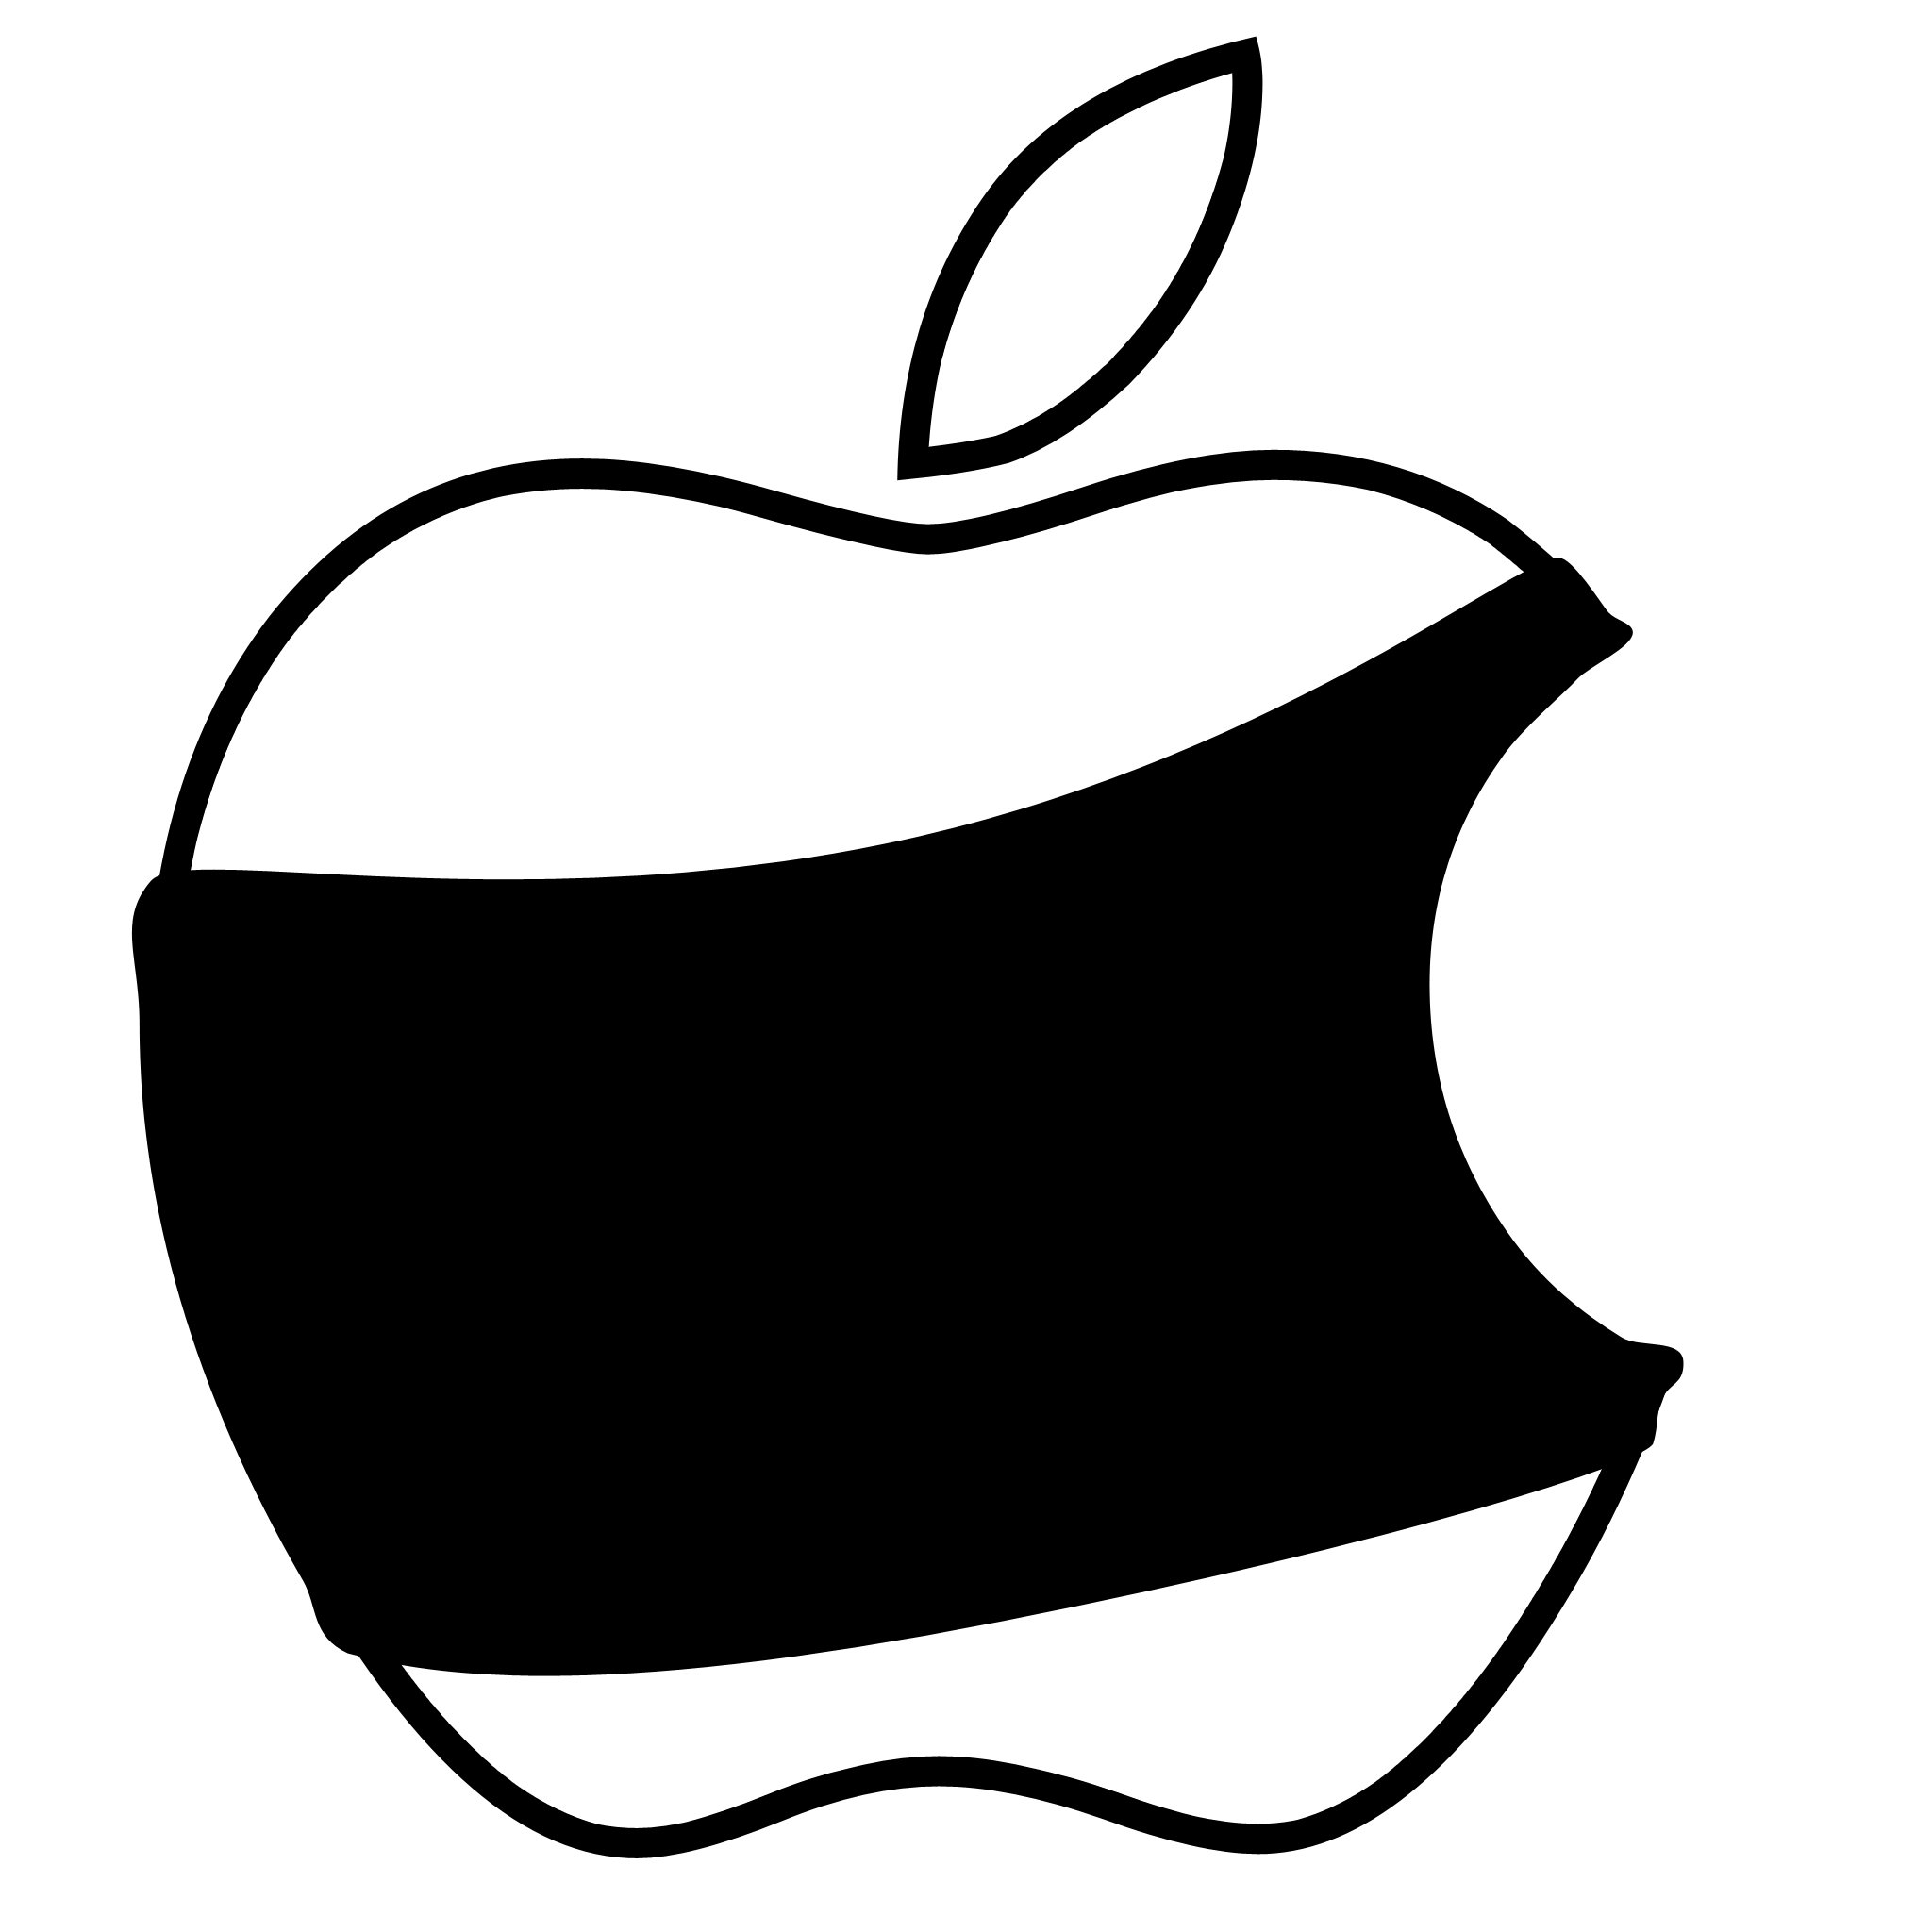 Perforated Apple Logo Ipad Wallpaper Iphone 6 Wallpaper Ipad タブレット壁紙 ギャラリー